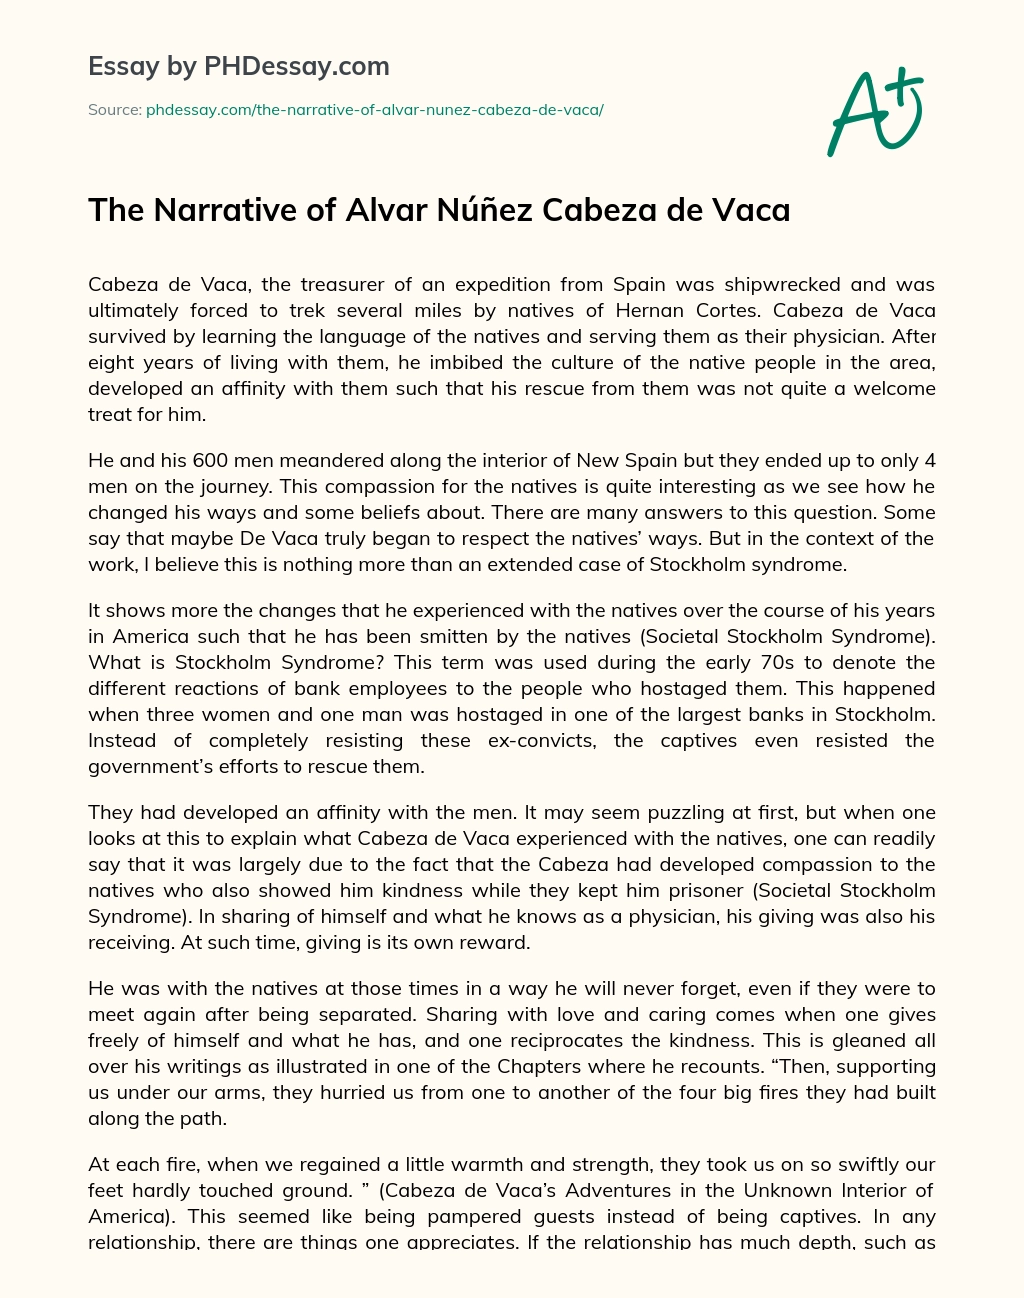 The Narrative of Alvar Núñez Cabeza de Vaca essay